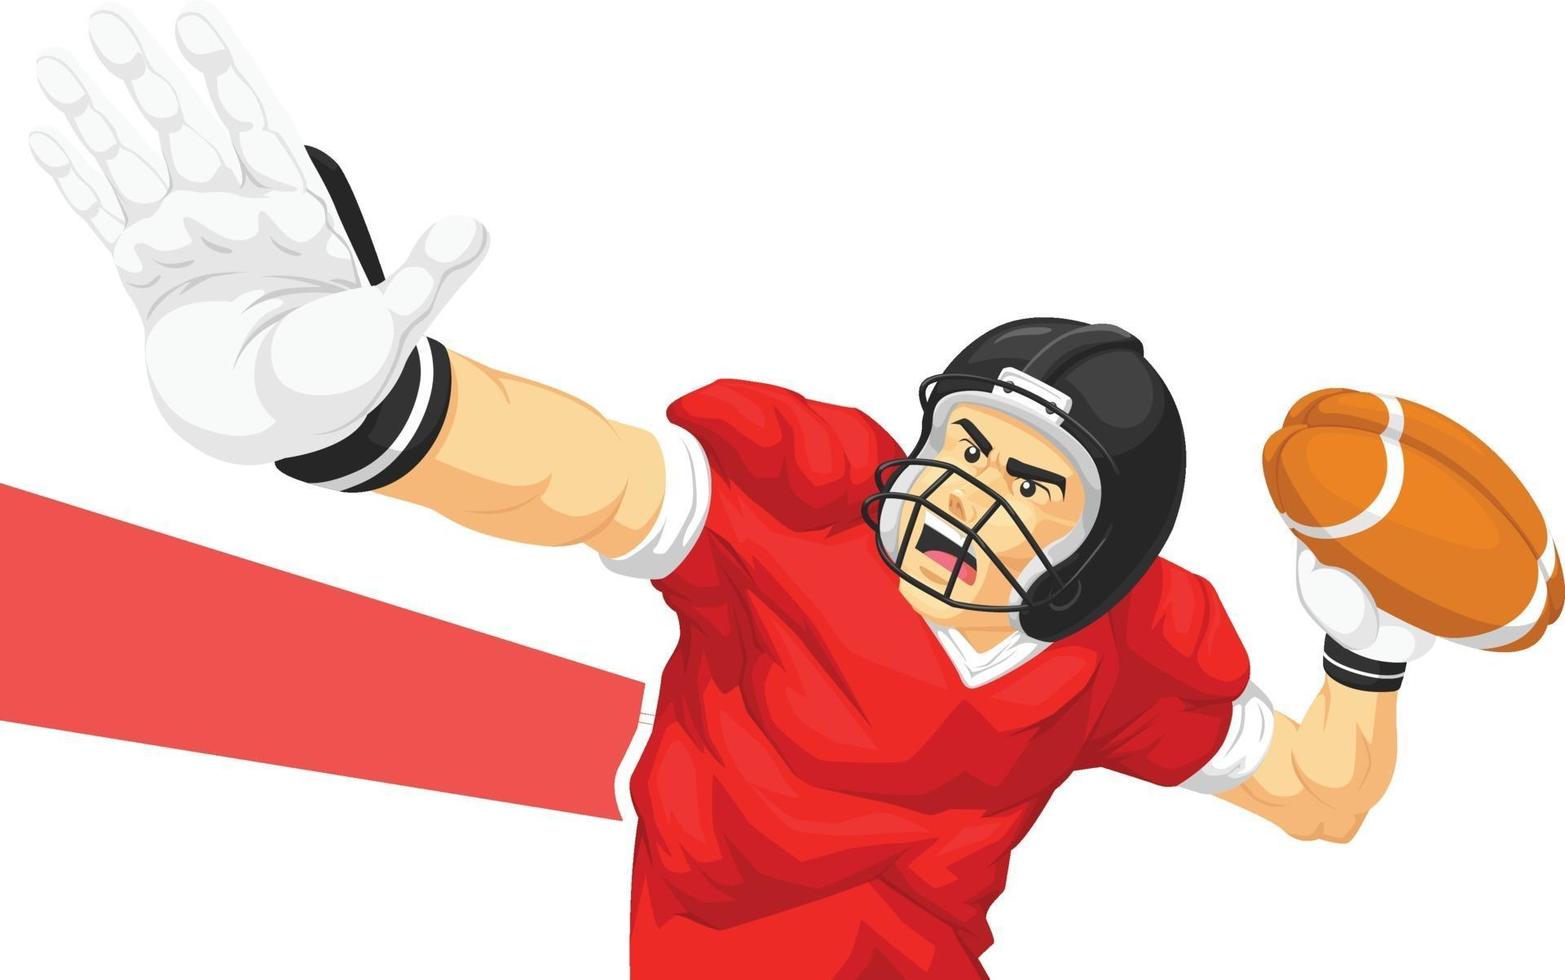 American Football Quarterback Player Throwing Ball Cartoon Drawing vector